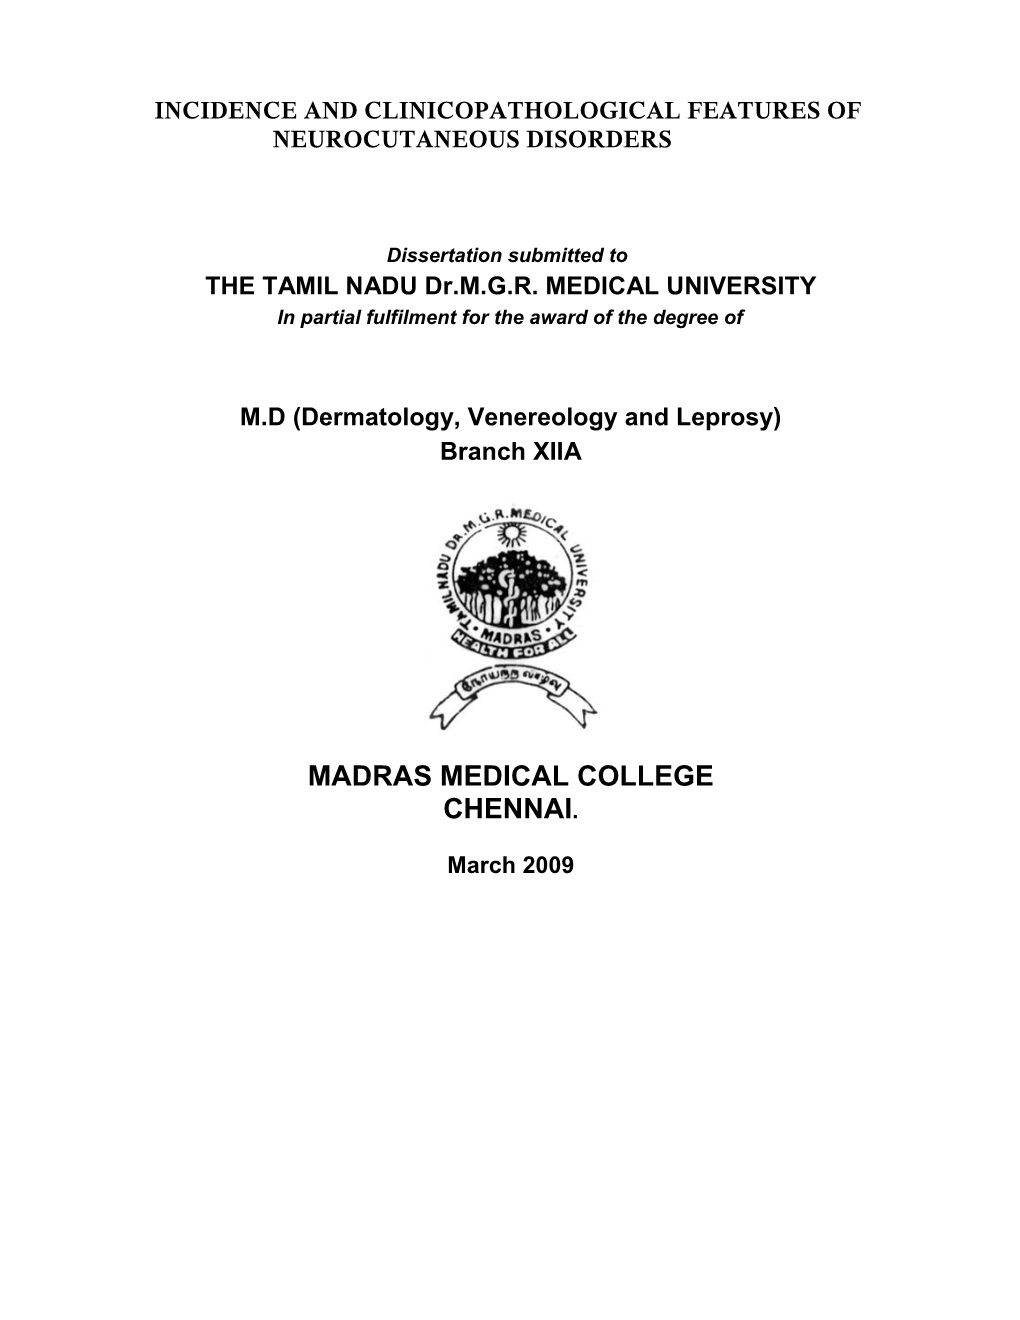 Madras Medical College Chennai